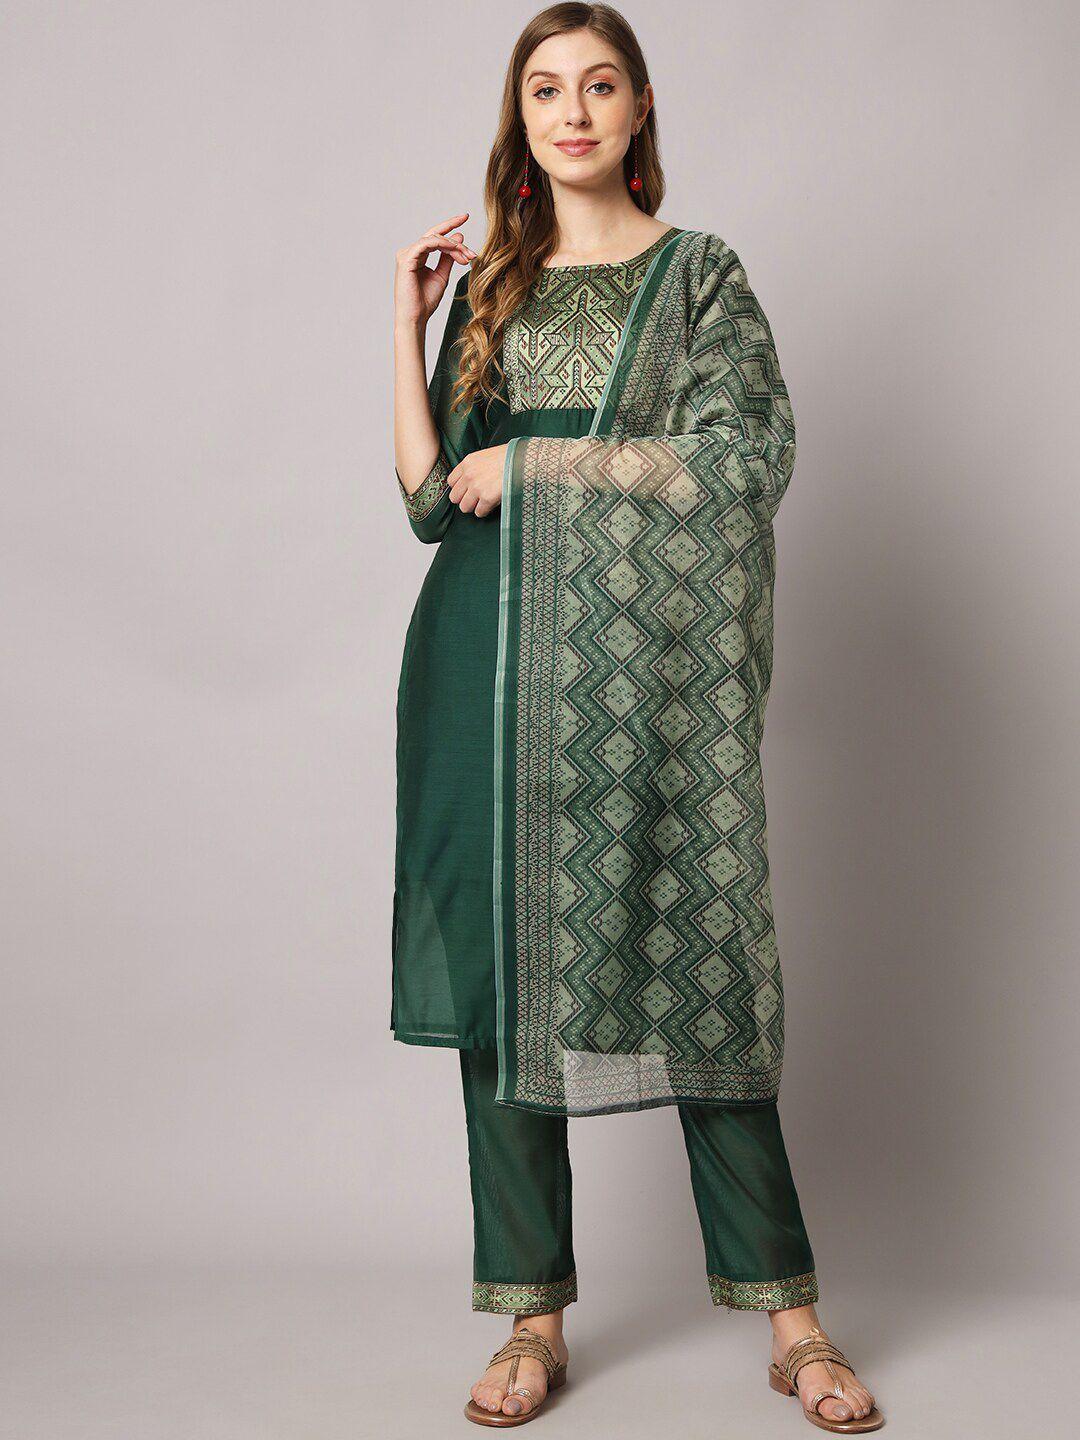 sun fashion and lifestyle regular thread work kurta & trousers with dupatta